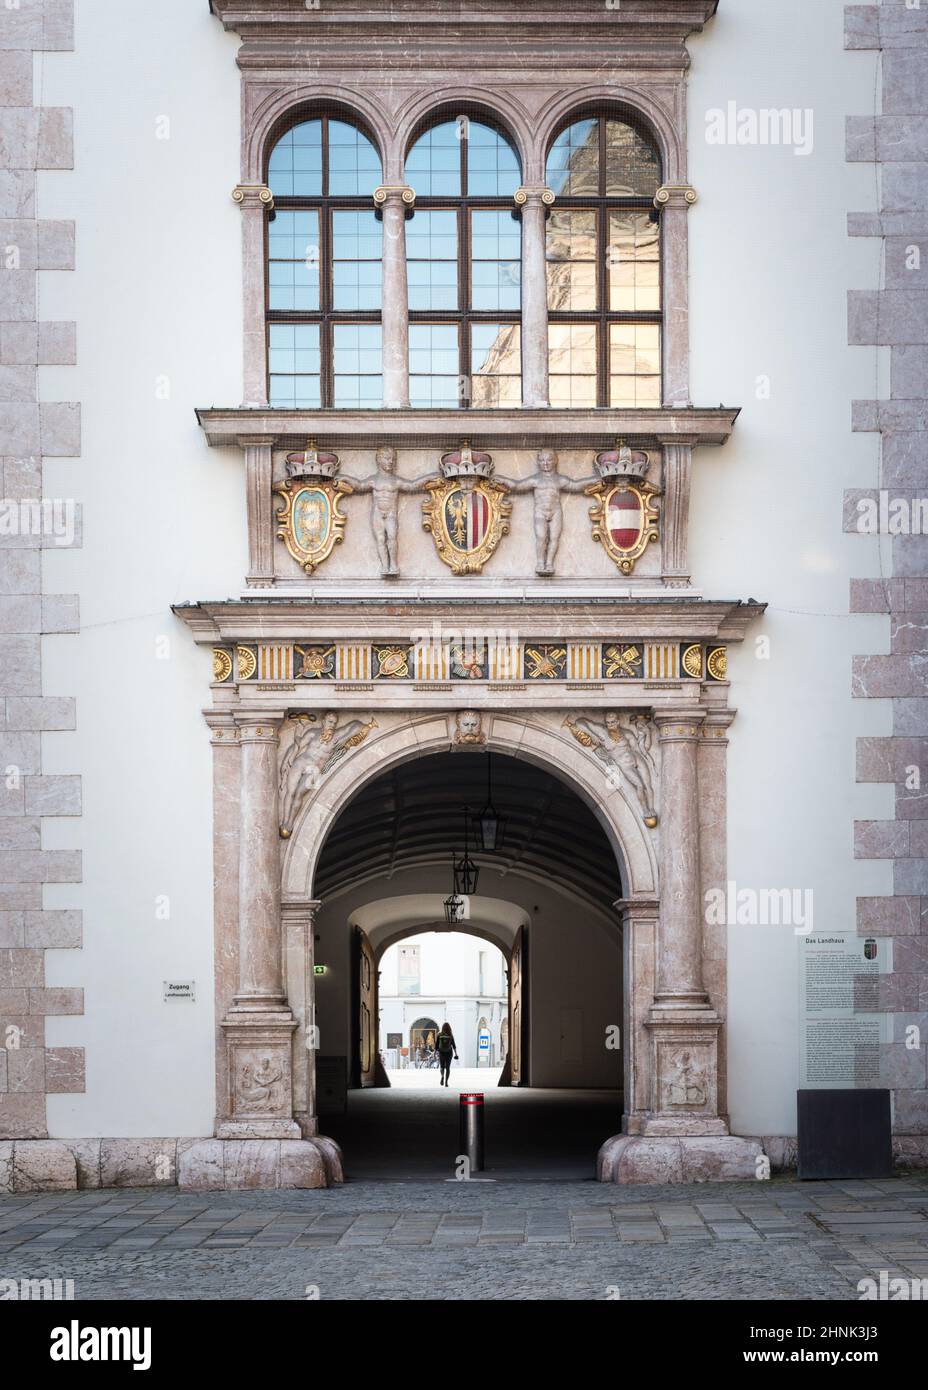 Portal of the Landhaus building, Linz, Upper Austria, Austria Stock Photo